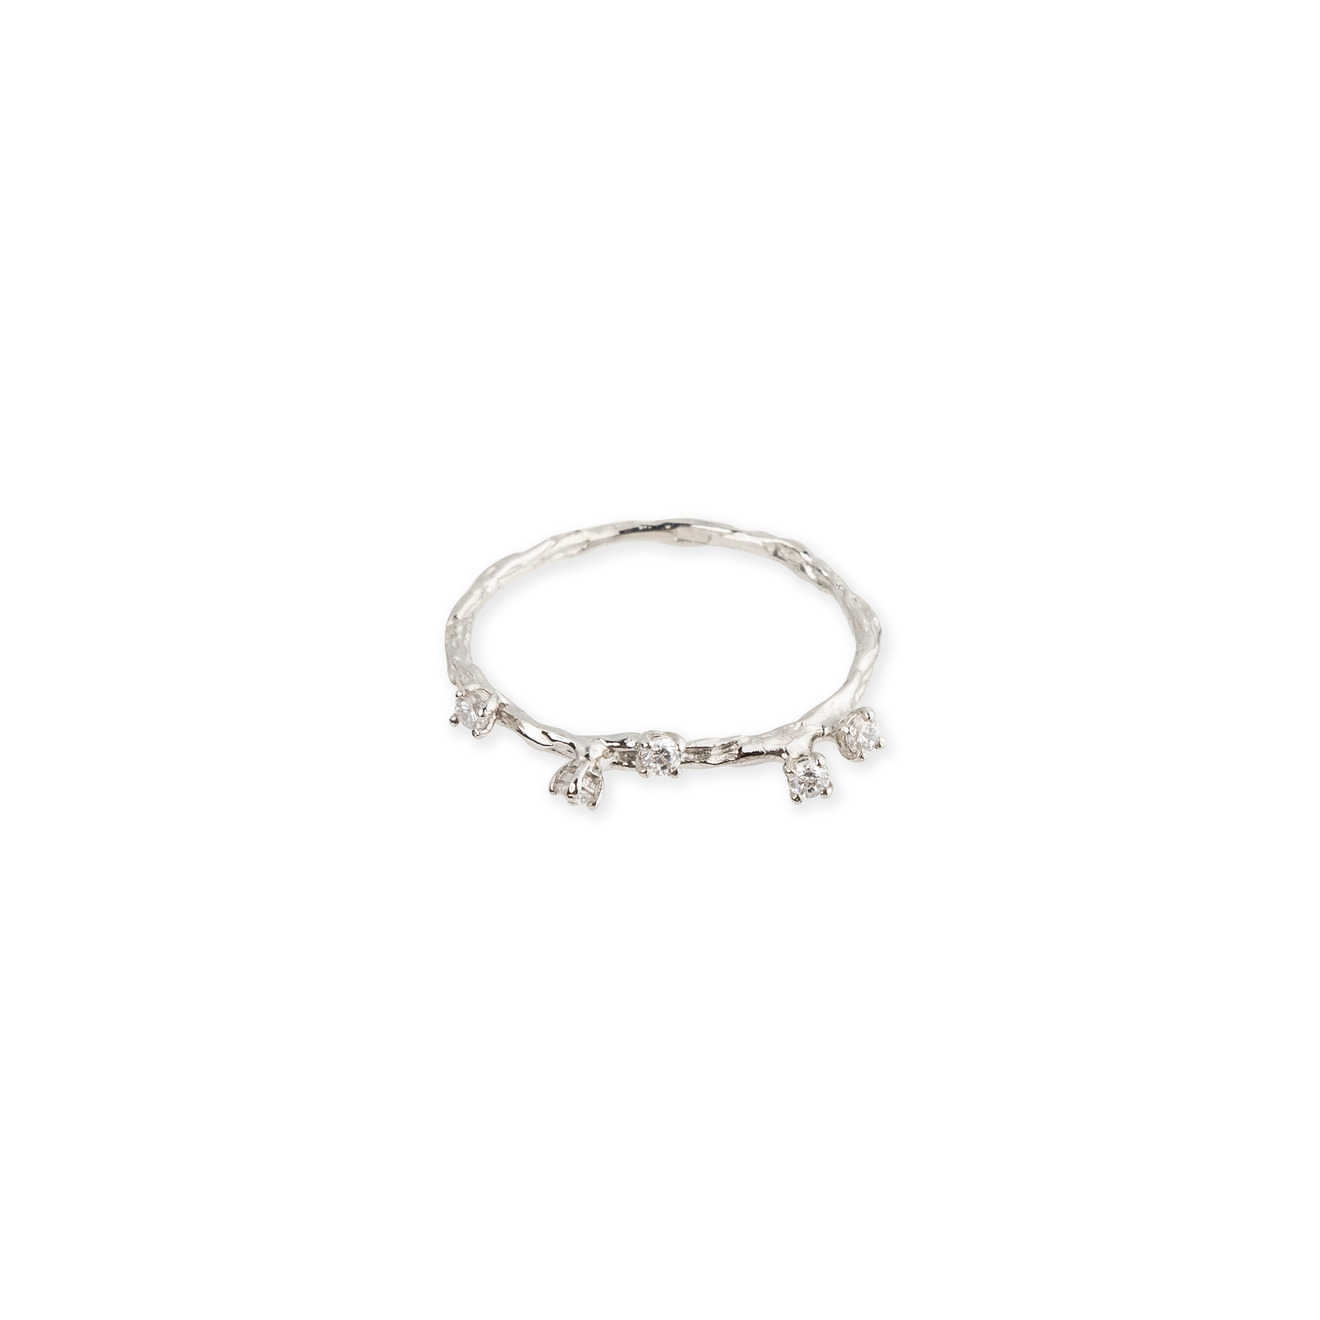 nastya maximova безразмерное кольцо из серебра с фианитами Nastya Maximova Тонкое кольцо из серебра с 5 кристаллами